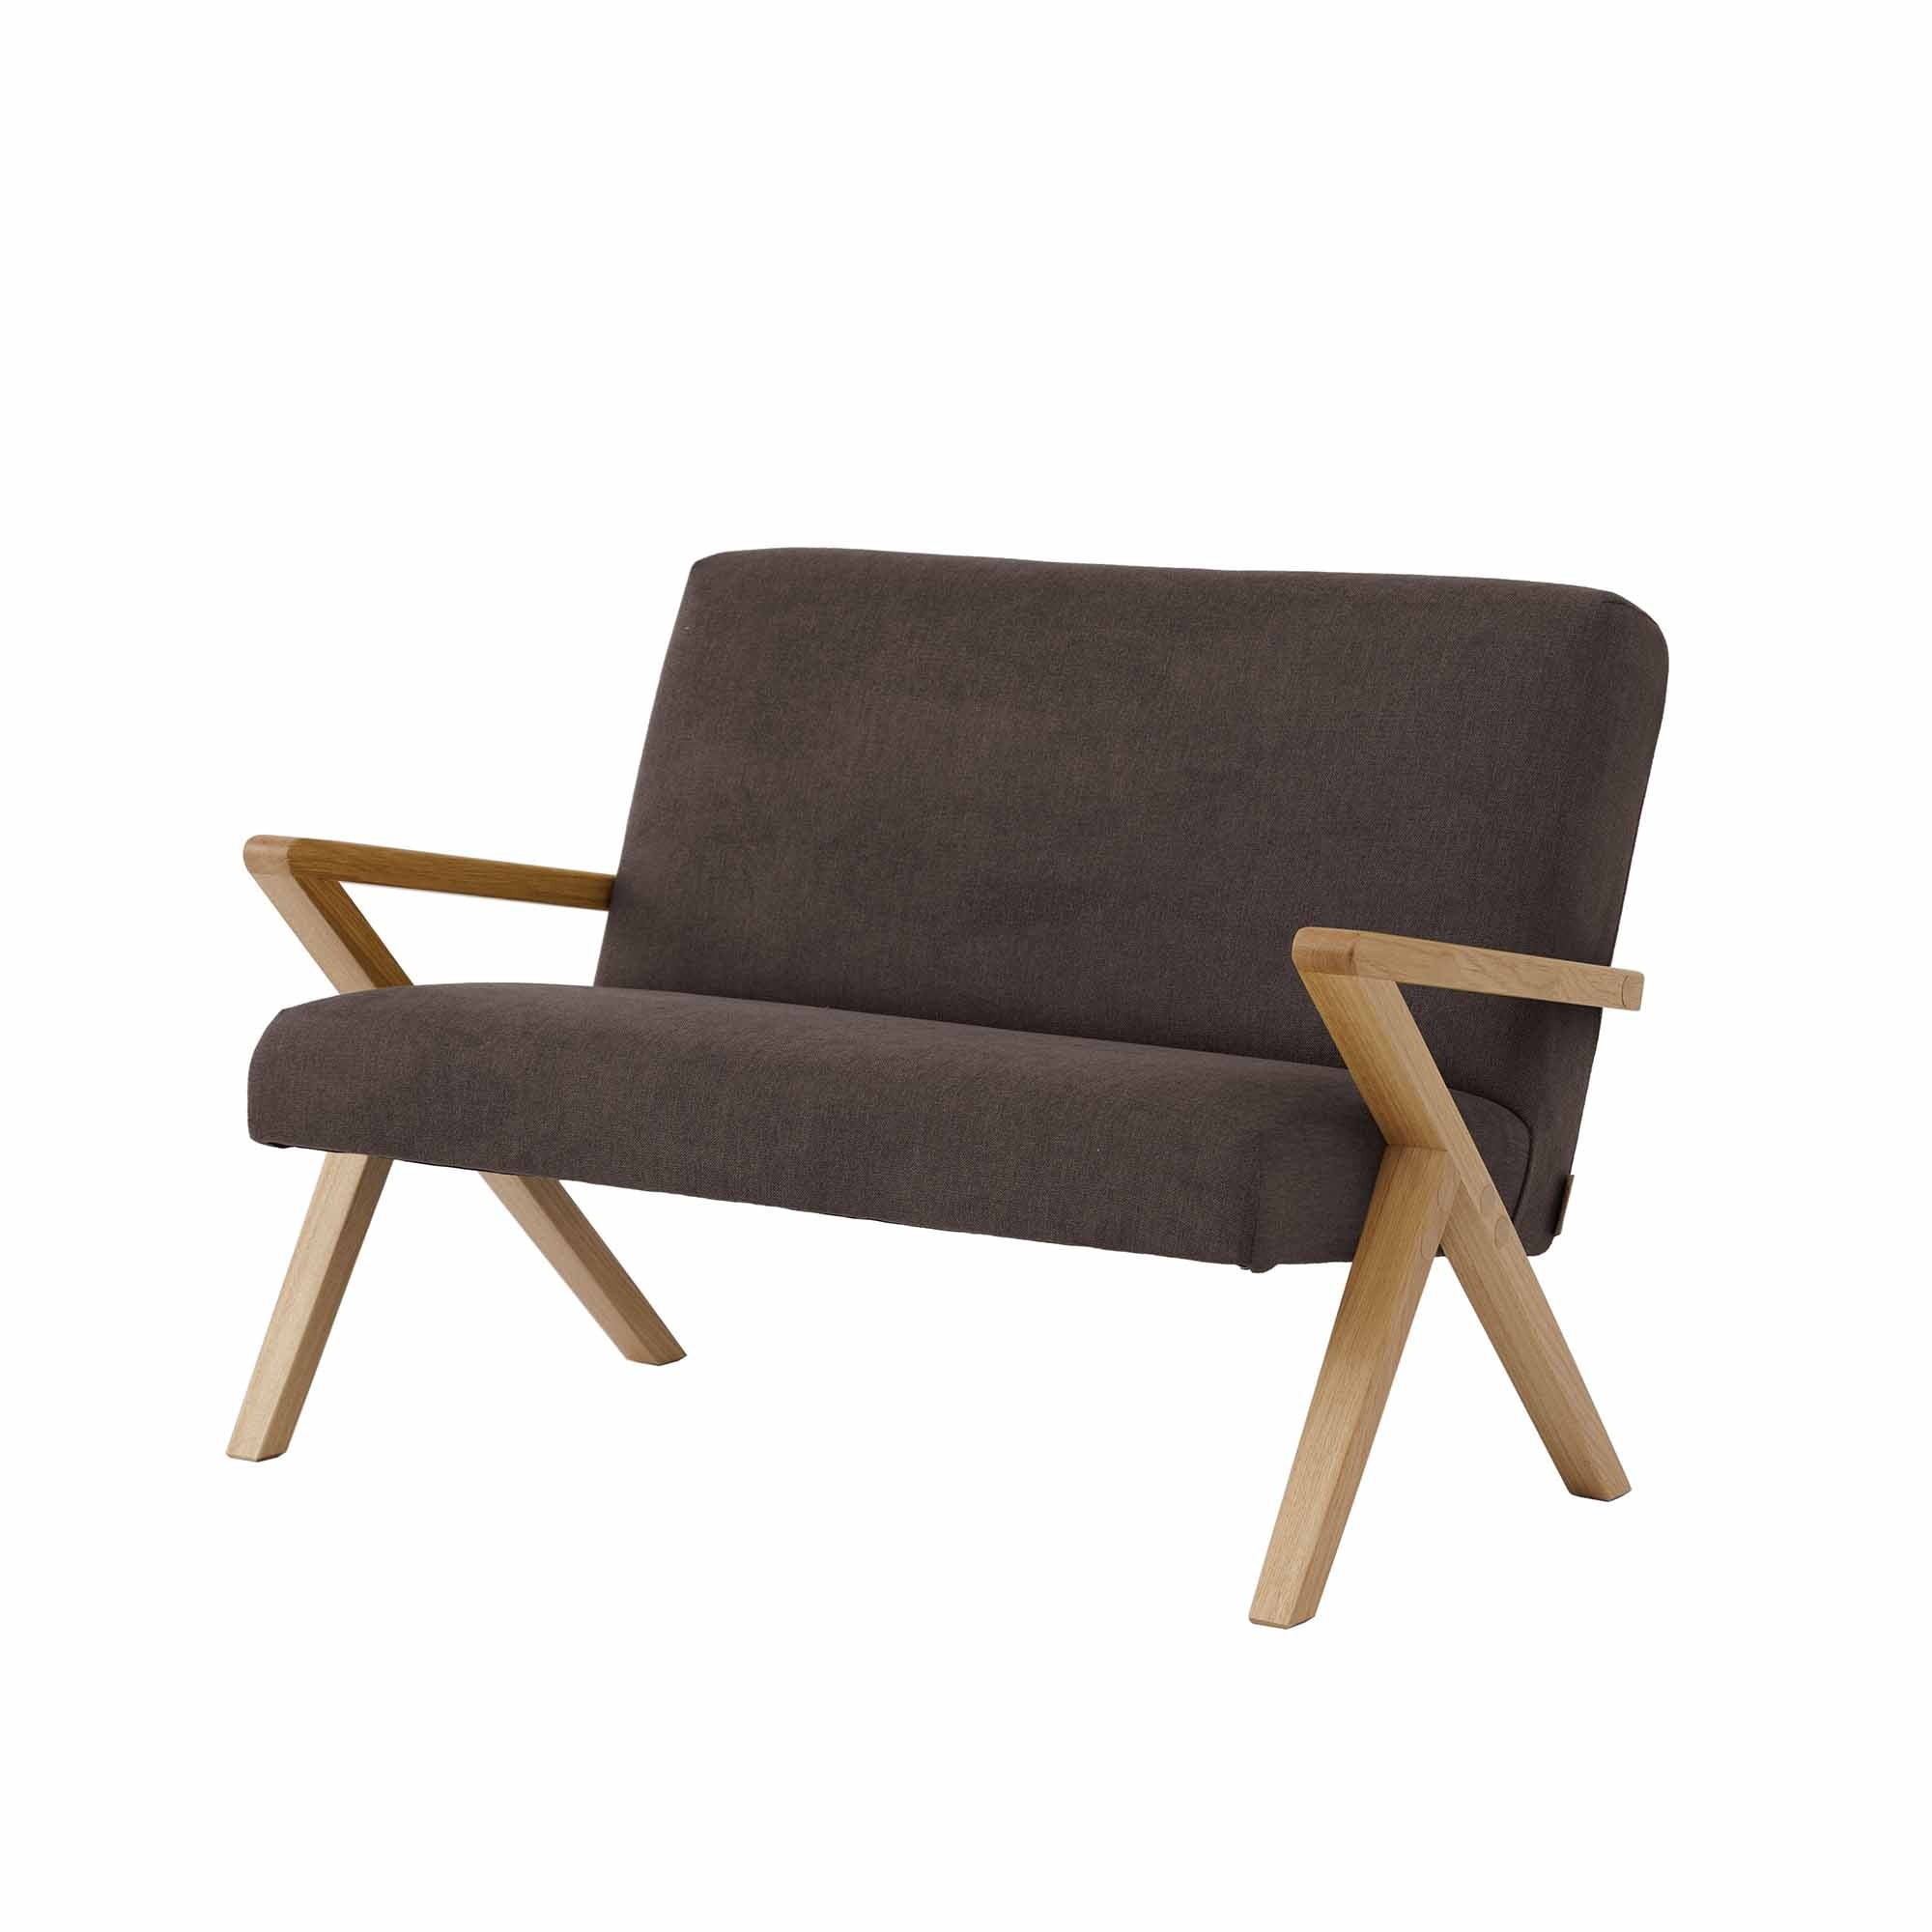 KIDS RETROSTAR 2-Seater Sofa, Oak Wood Frame, Natural brown fabric, half-side view